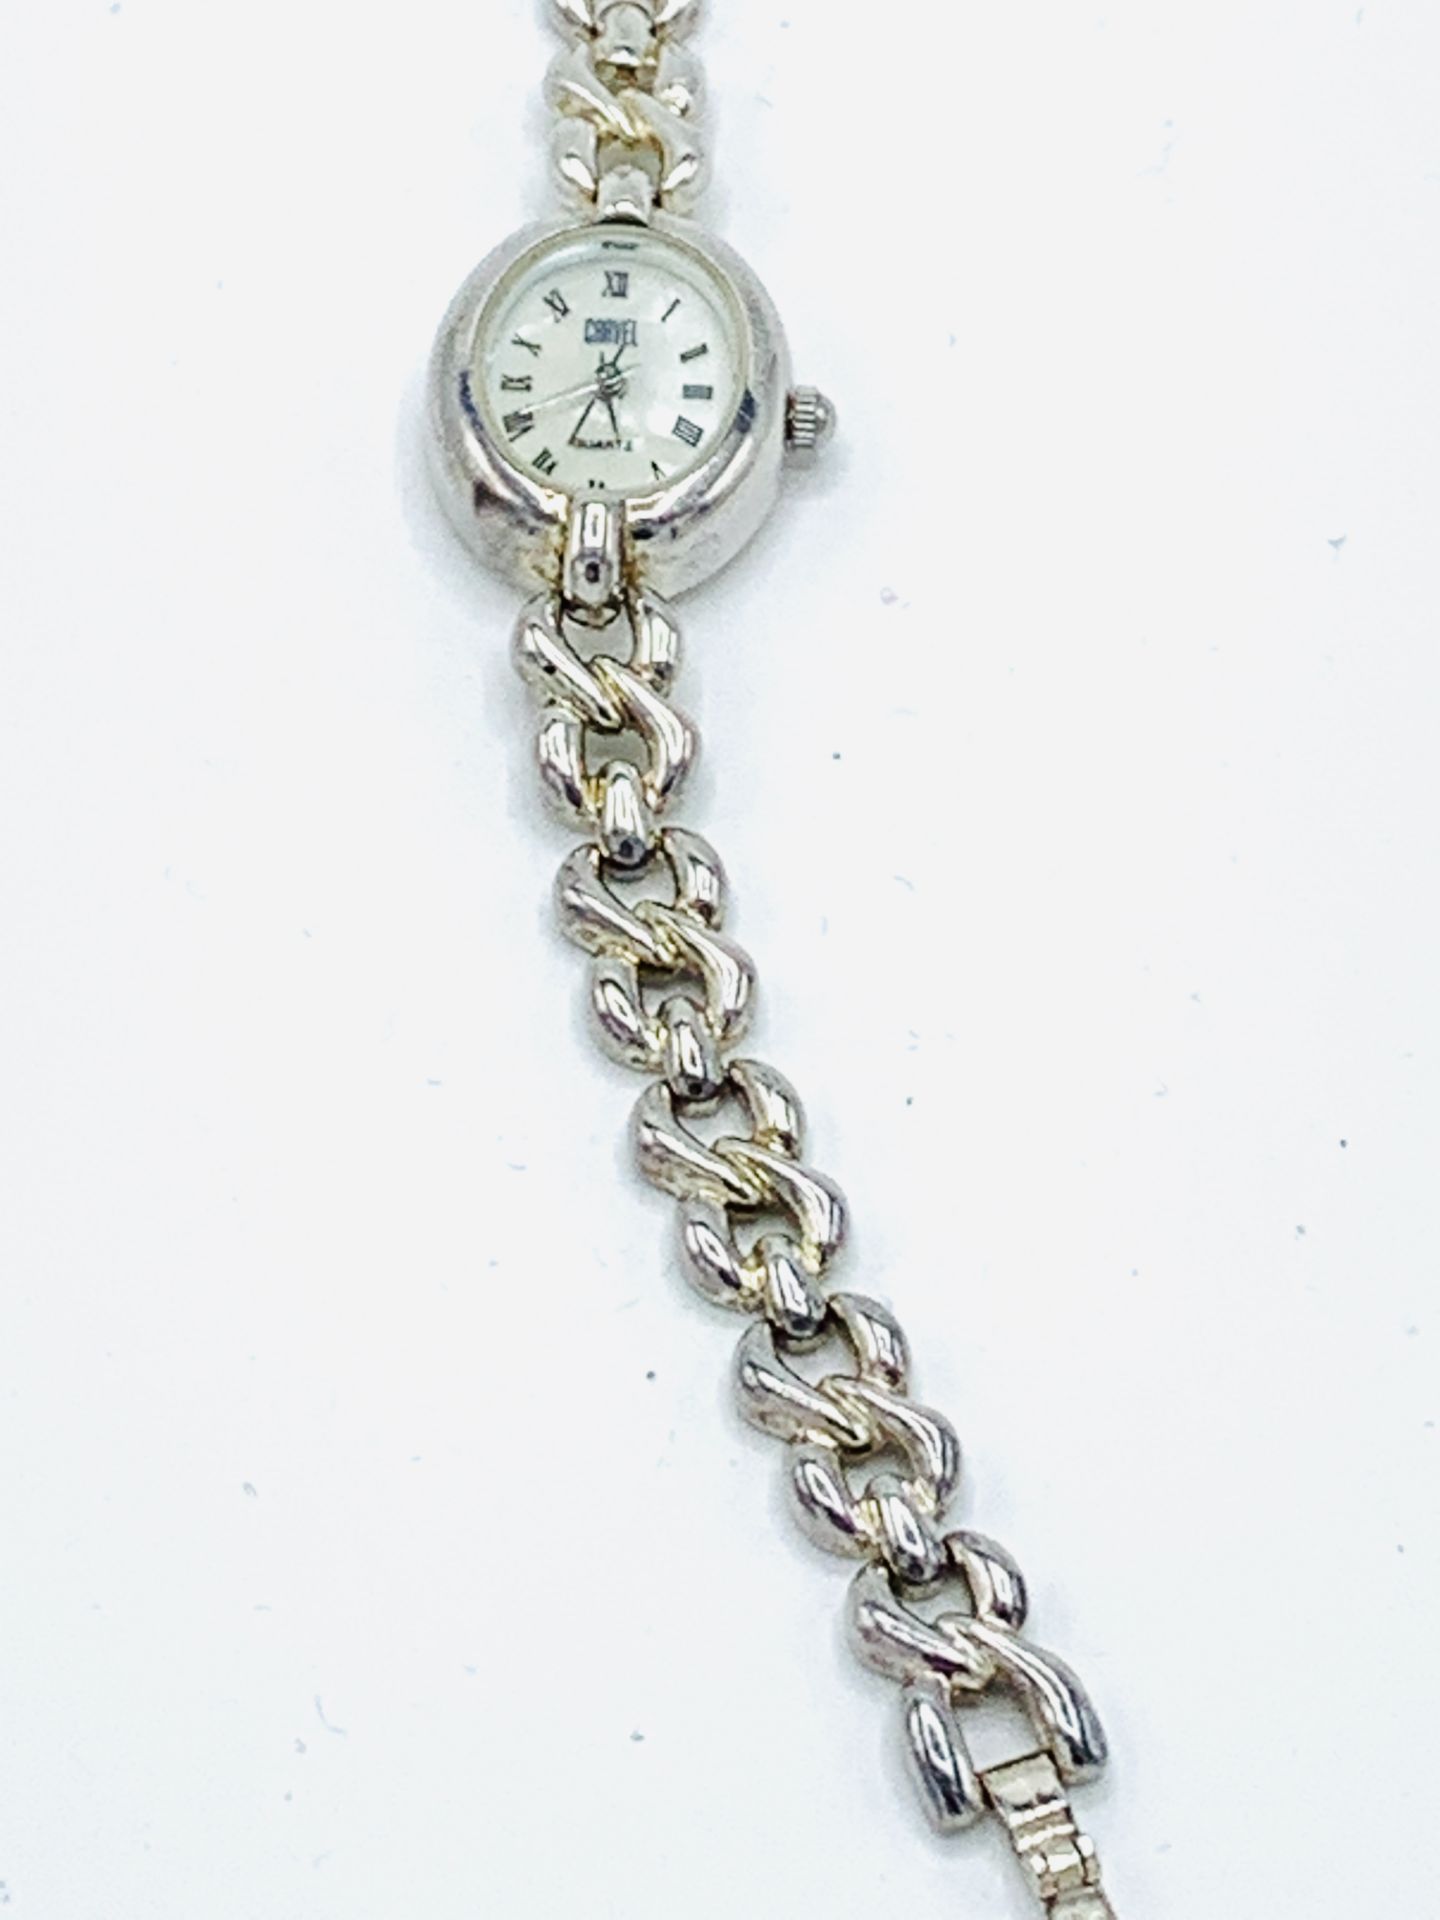 "Carvel" sterling silver quartz watch - Image 4 of 4